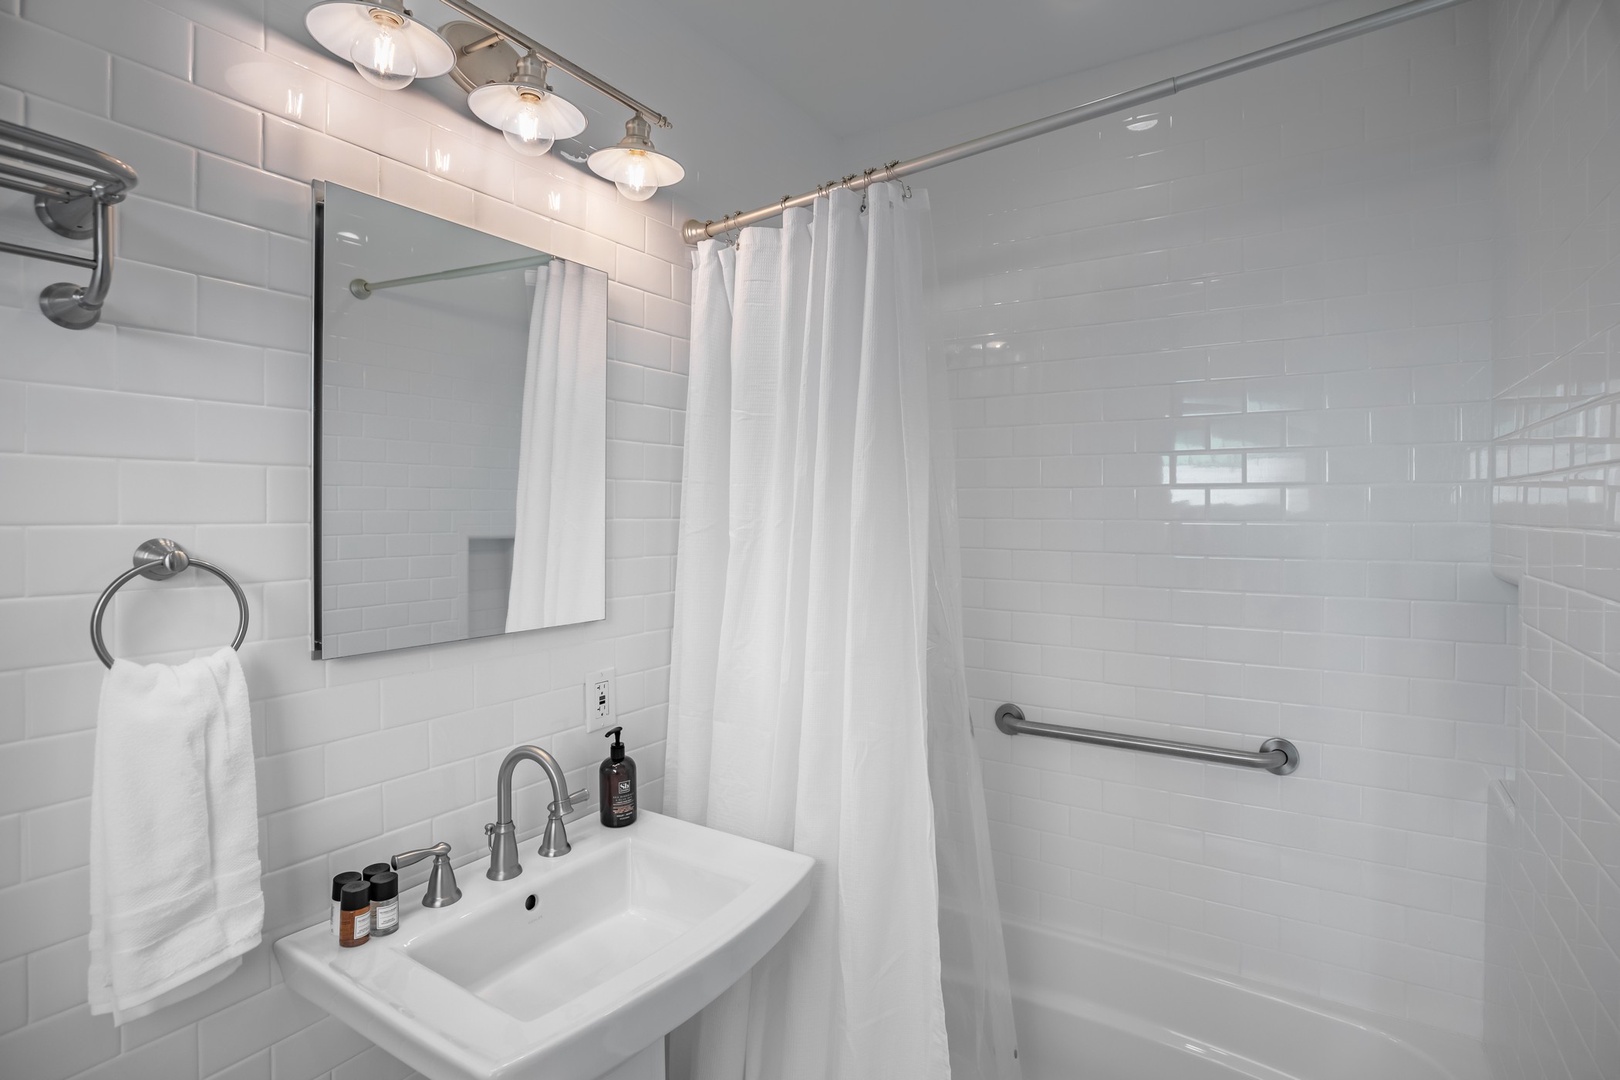 Primary en-suite bath with tub/shower